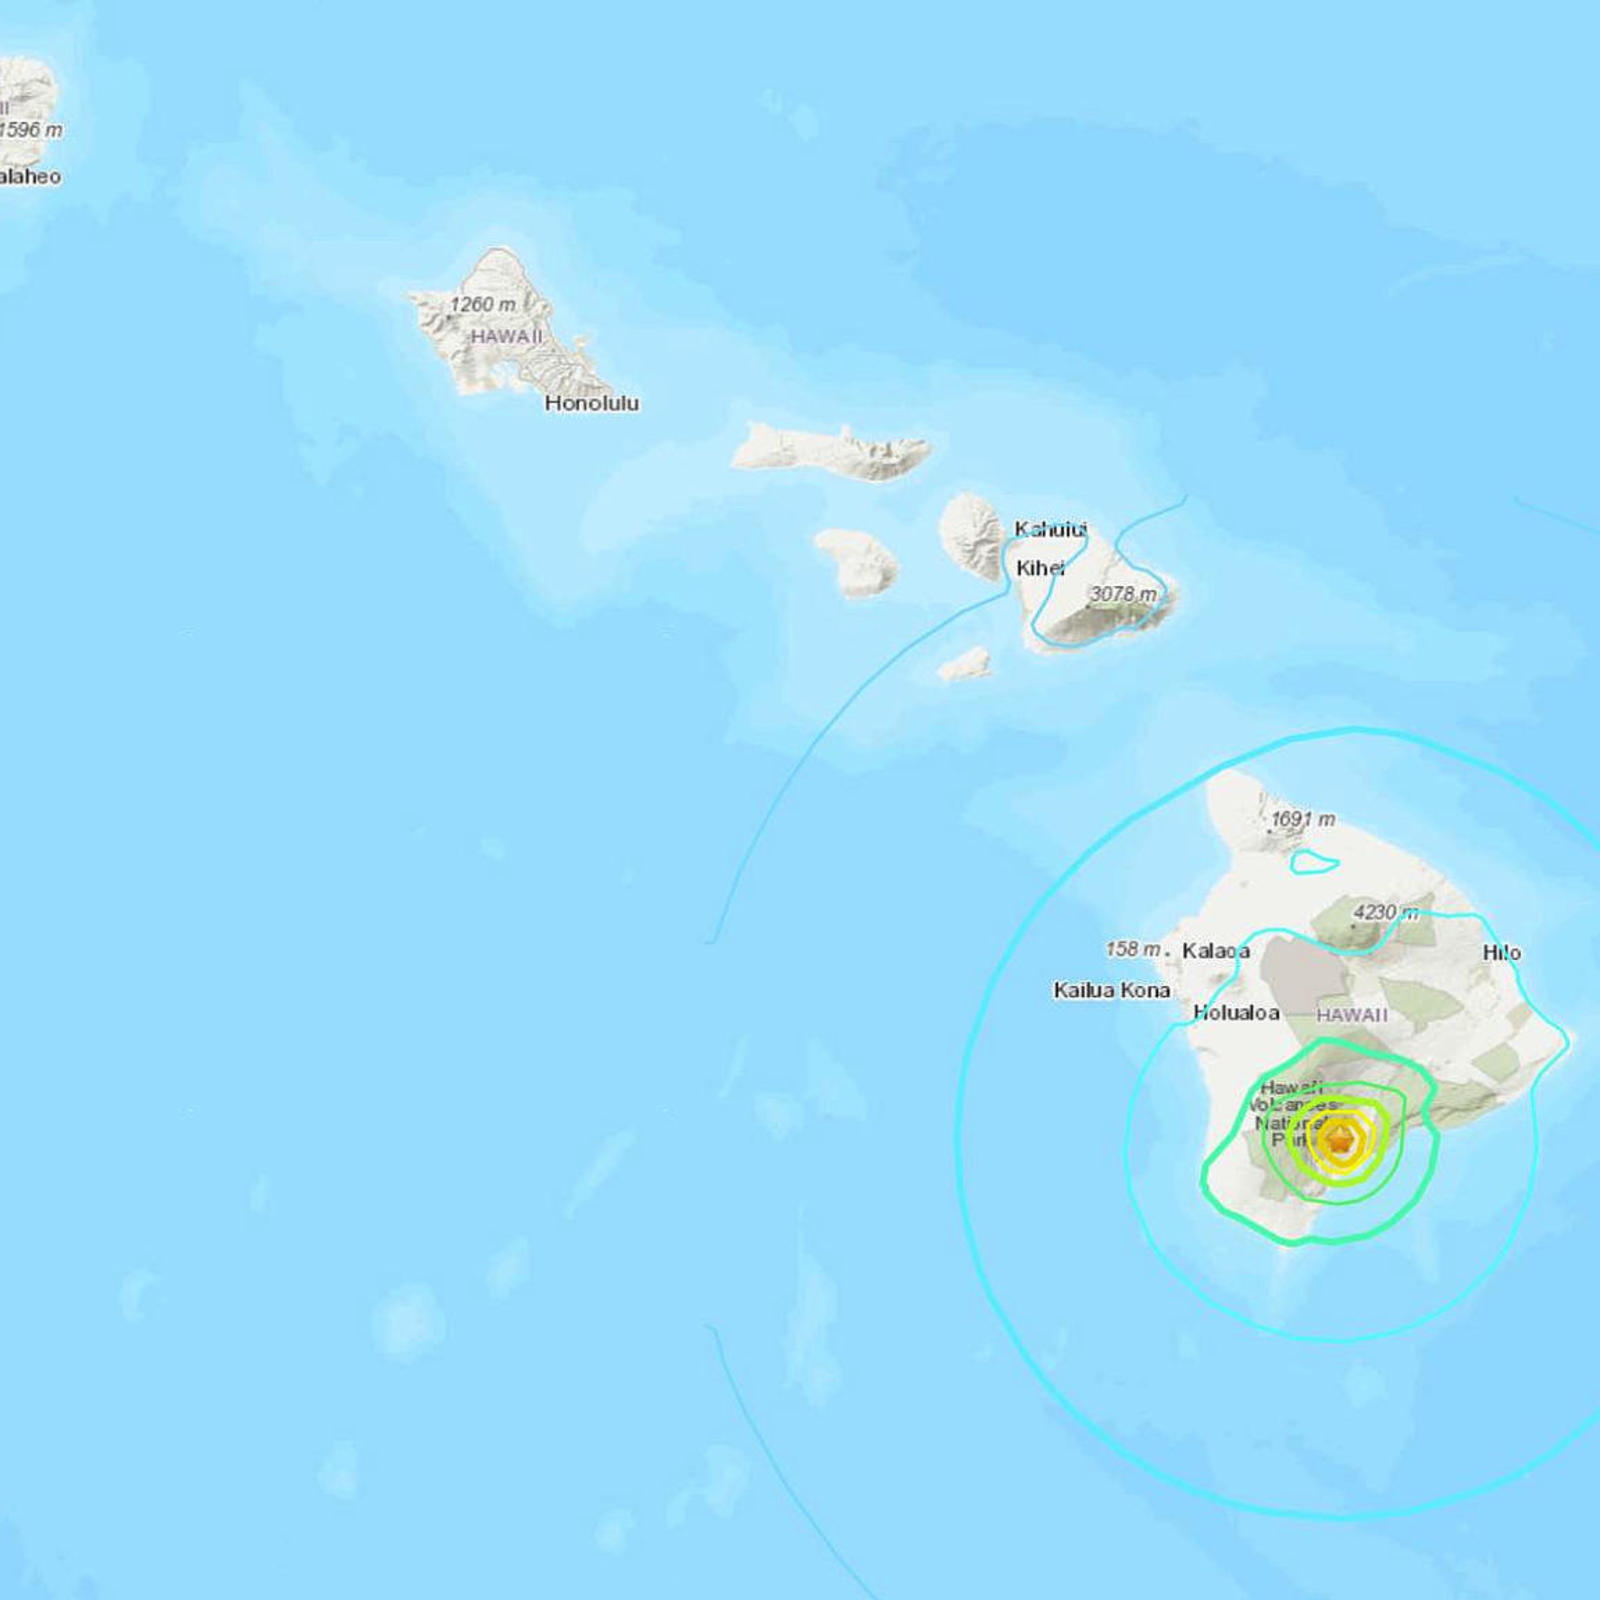 preliminary 5.7 magnitude earthquake shakes hawaii's big island